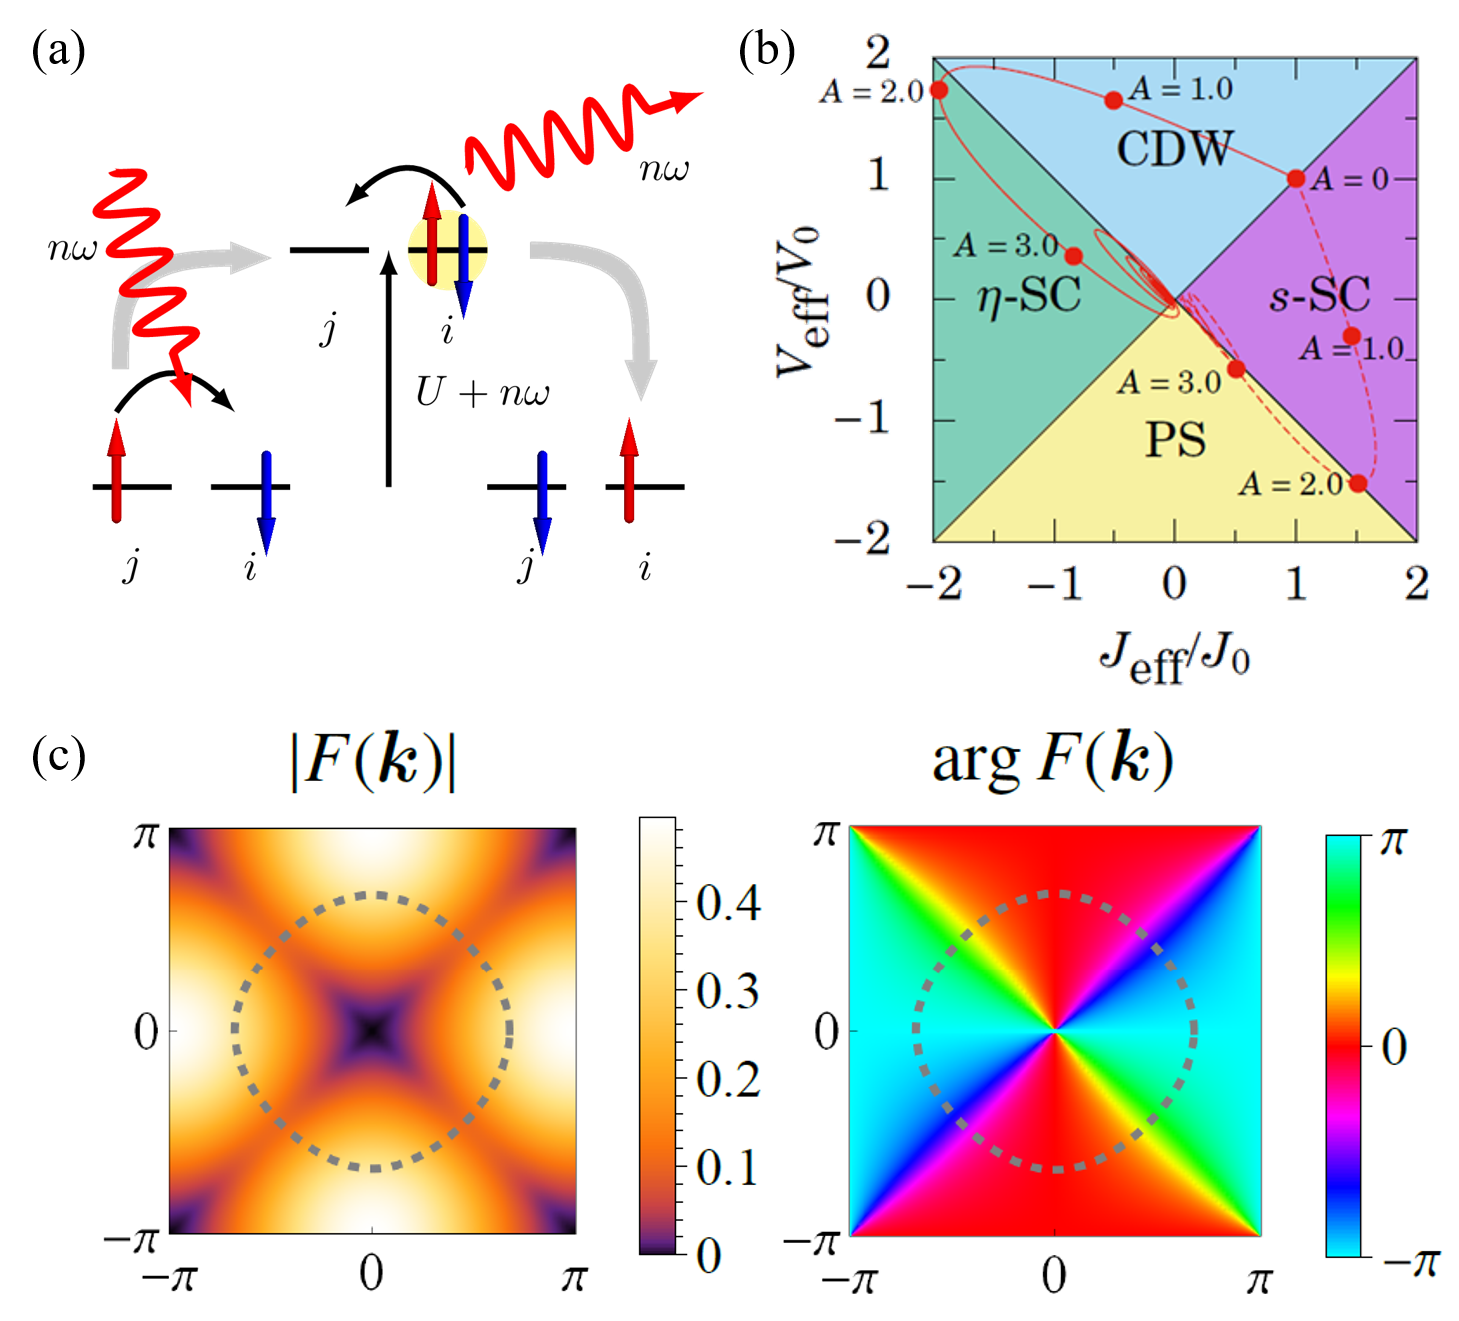 (a) 周期駆動系の強結合展開における仮想遷移。電子がホッピングする際に光子の吸収や放出が起こる。(b) 駆動された引力Hubbard模型の相図。クーパー対のホッピング<i>J</i>と対間の斥力<i>V</i>の実効的な値が外場<i>A</i>の影響で赤い線に沿って変化し、ηペアリング超伝導と呼ばれる特殊な超伝導状態が実現する(実線と破線は駆動周波数が異なる)。<i>s</i>-SC:
通常の<i>s</i>波超伝導、CDW:電荷密度波、η-SC:ηペアリング超伝導、PS:相分離。(c) 円偏光が照射されたときの銅酸化物超伝導体のギャップ関数の絶対値と位相を波数空間でプロットしたもの。